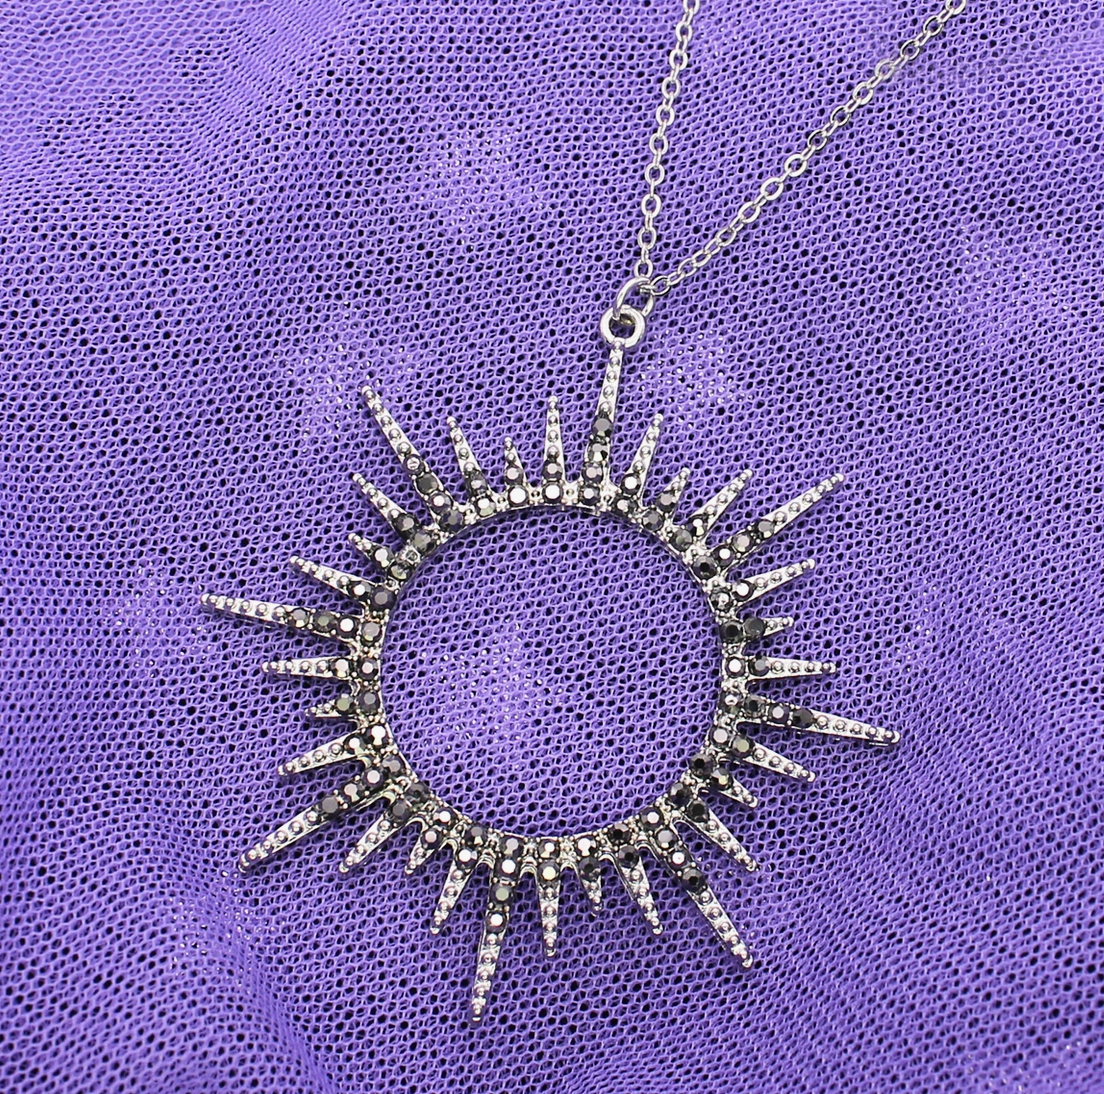 Silver Sunburst Necklace